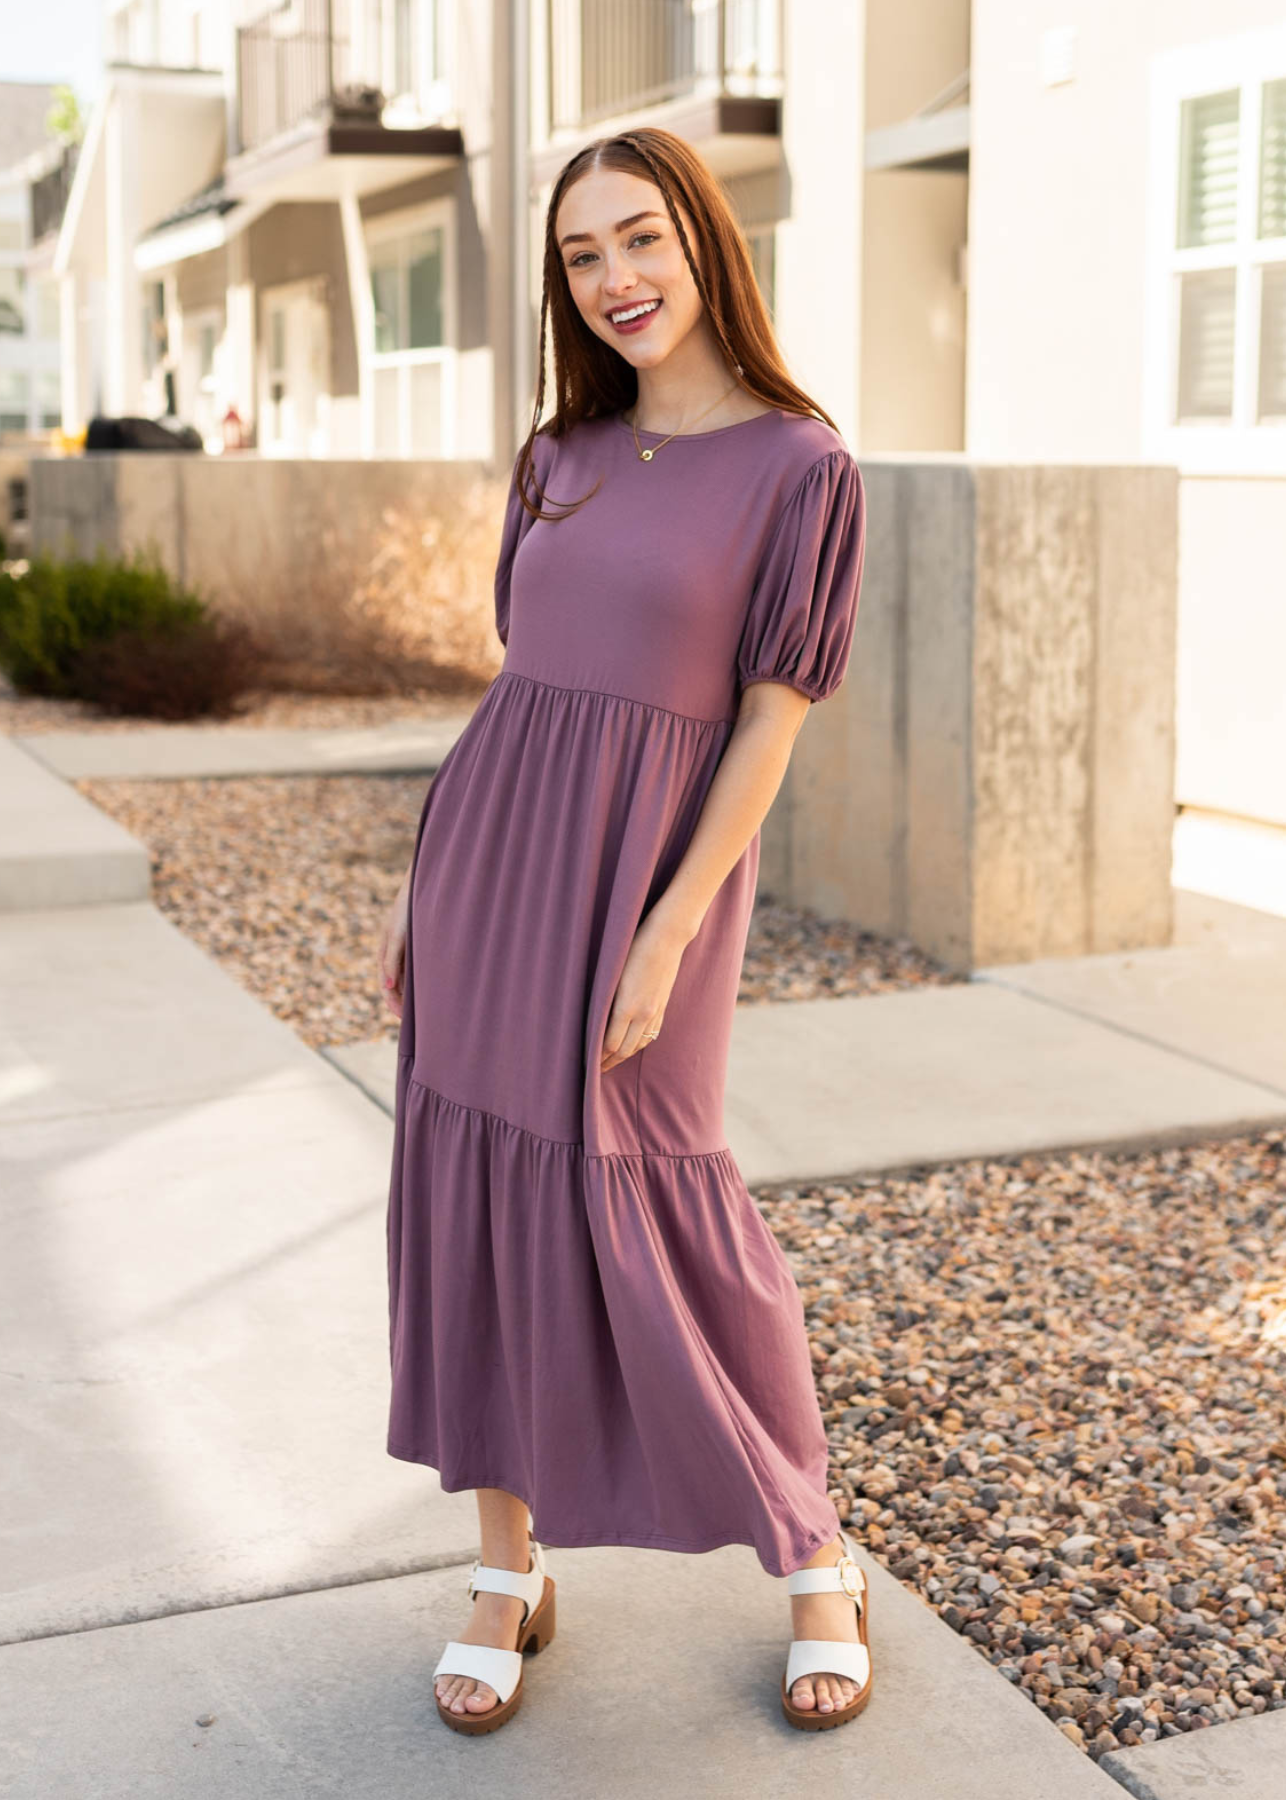 Lavender tiered dress